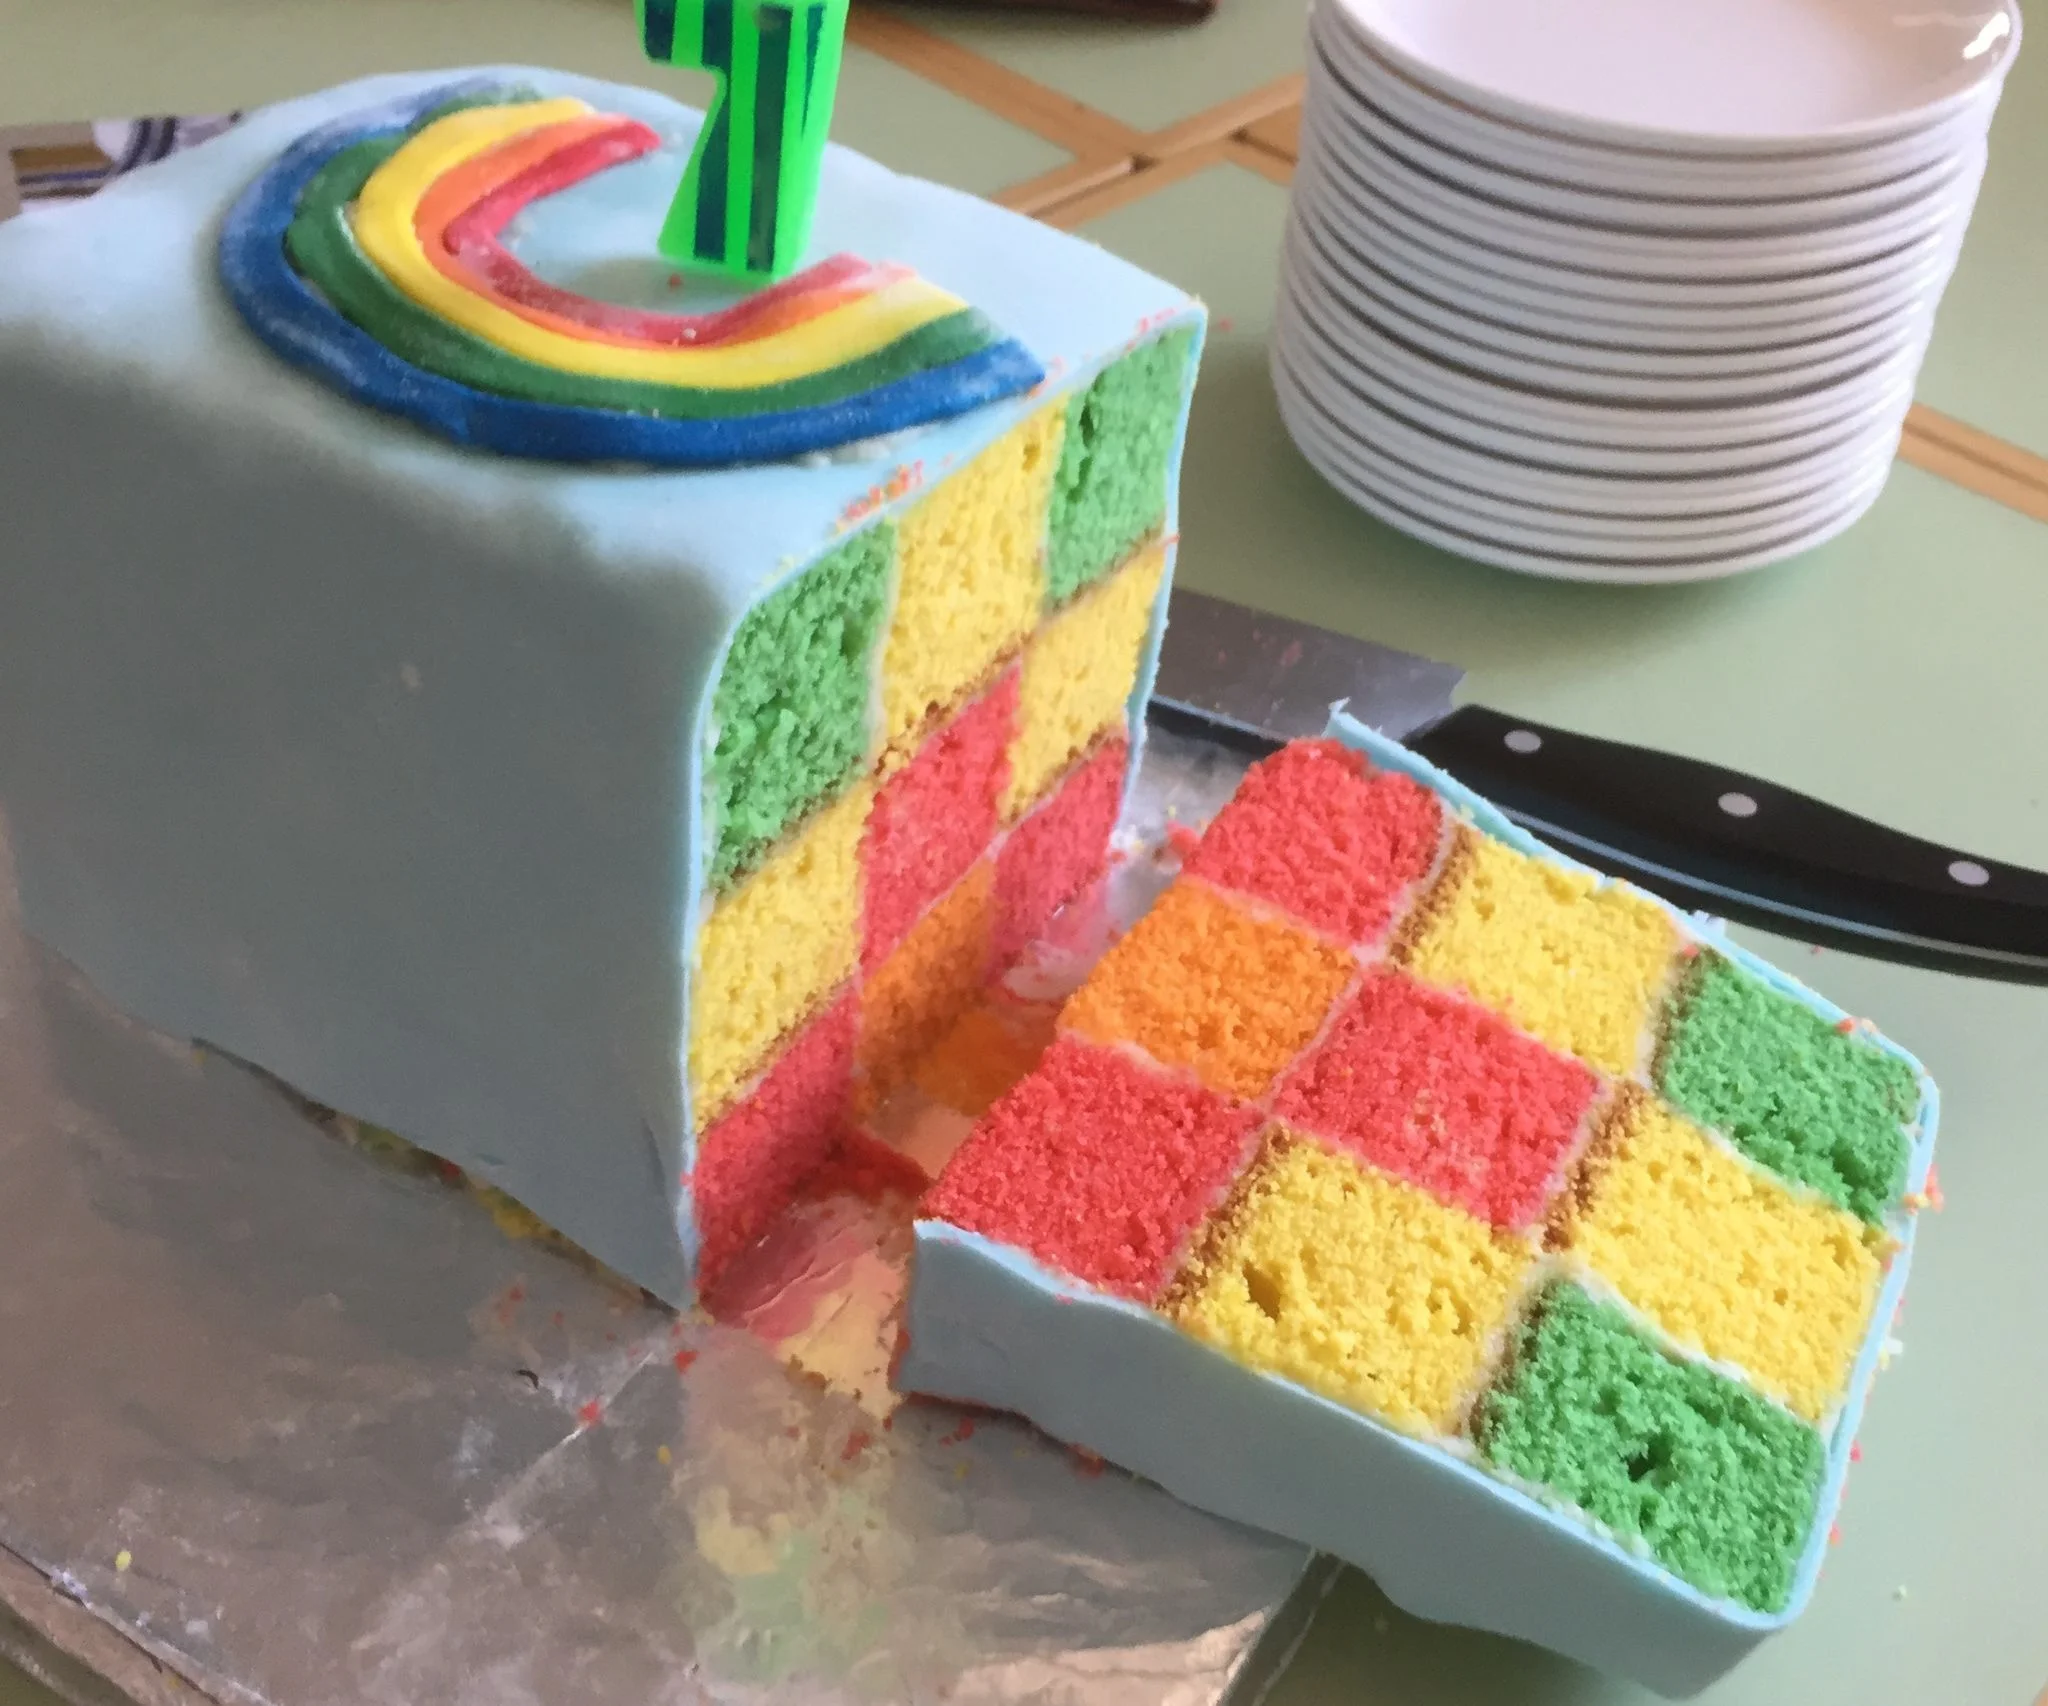 Colour block cake - Designs of Anniversary Cake